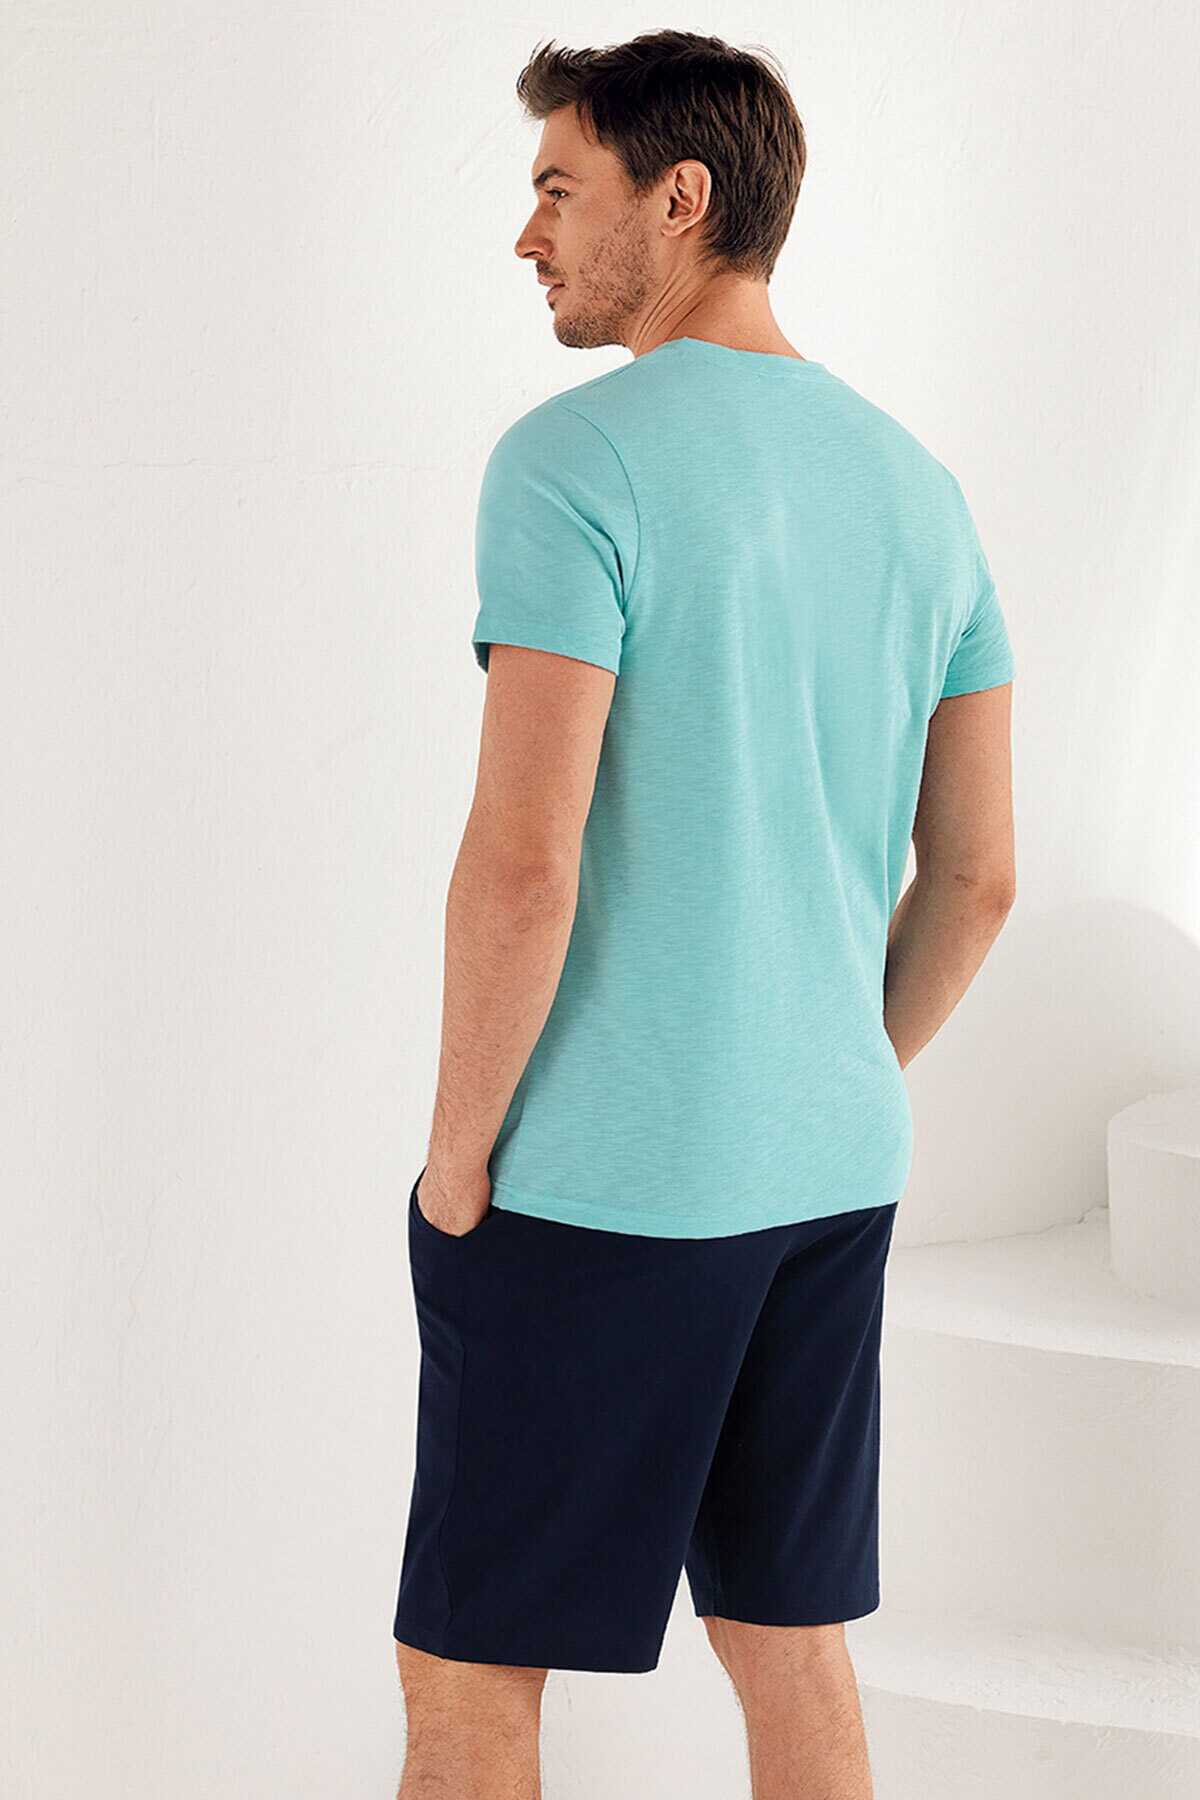 ست تیشرت شلوارک برمودا چاپ دار بندی مردانه آبی روشن سرمه ای برند Şahinler